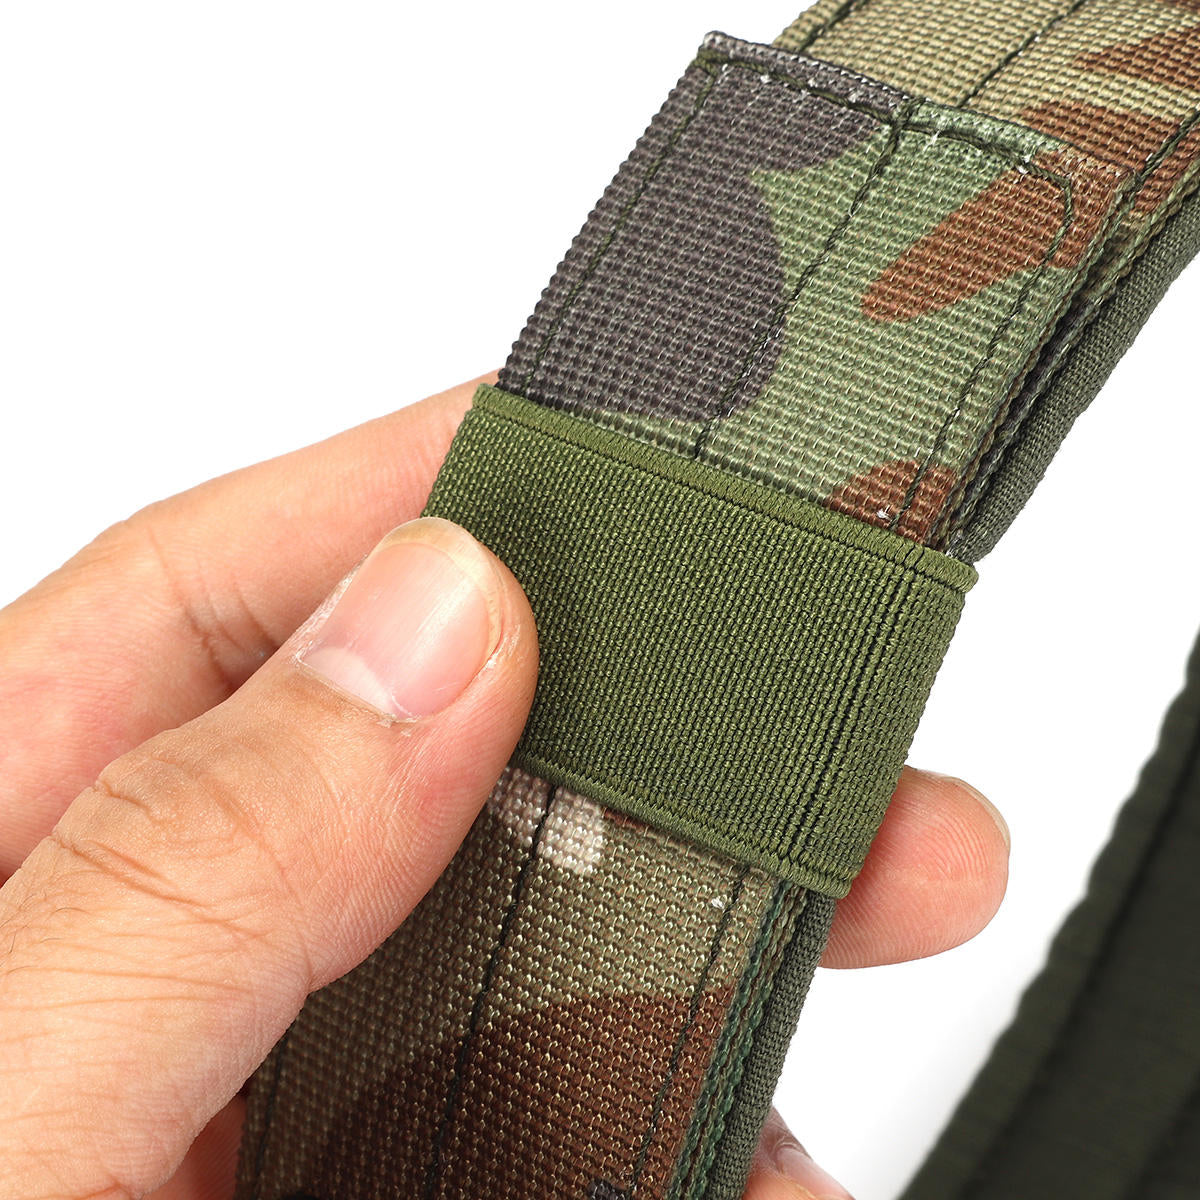 Tactical Military Adjustable Dog Training Collar Nylon Leash w/Metal Buckle